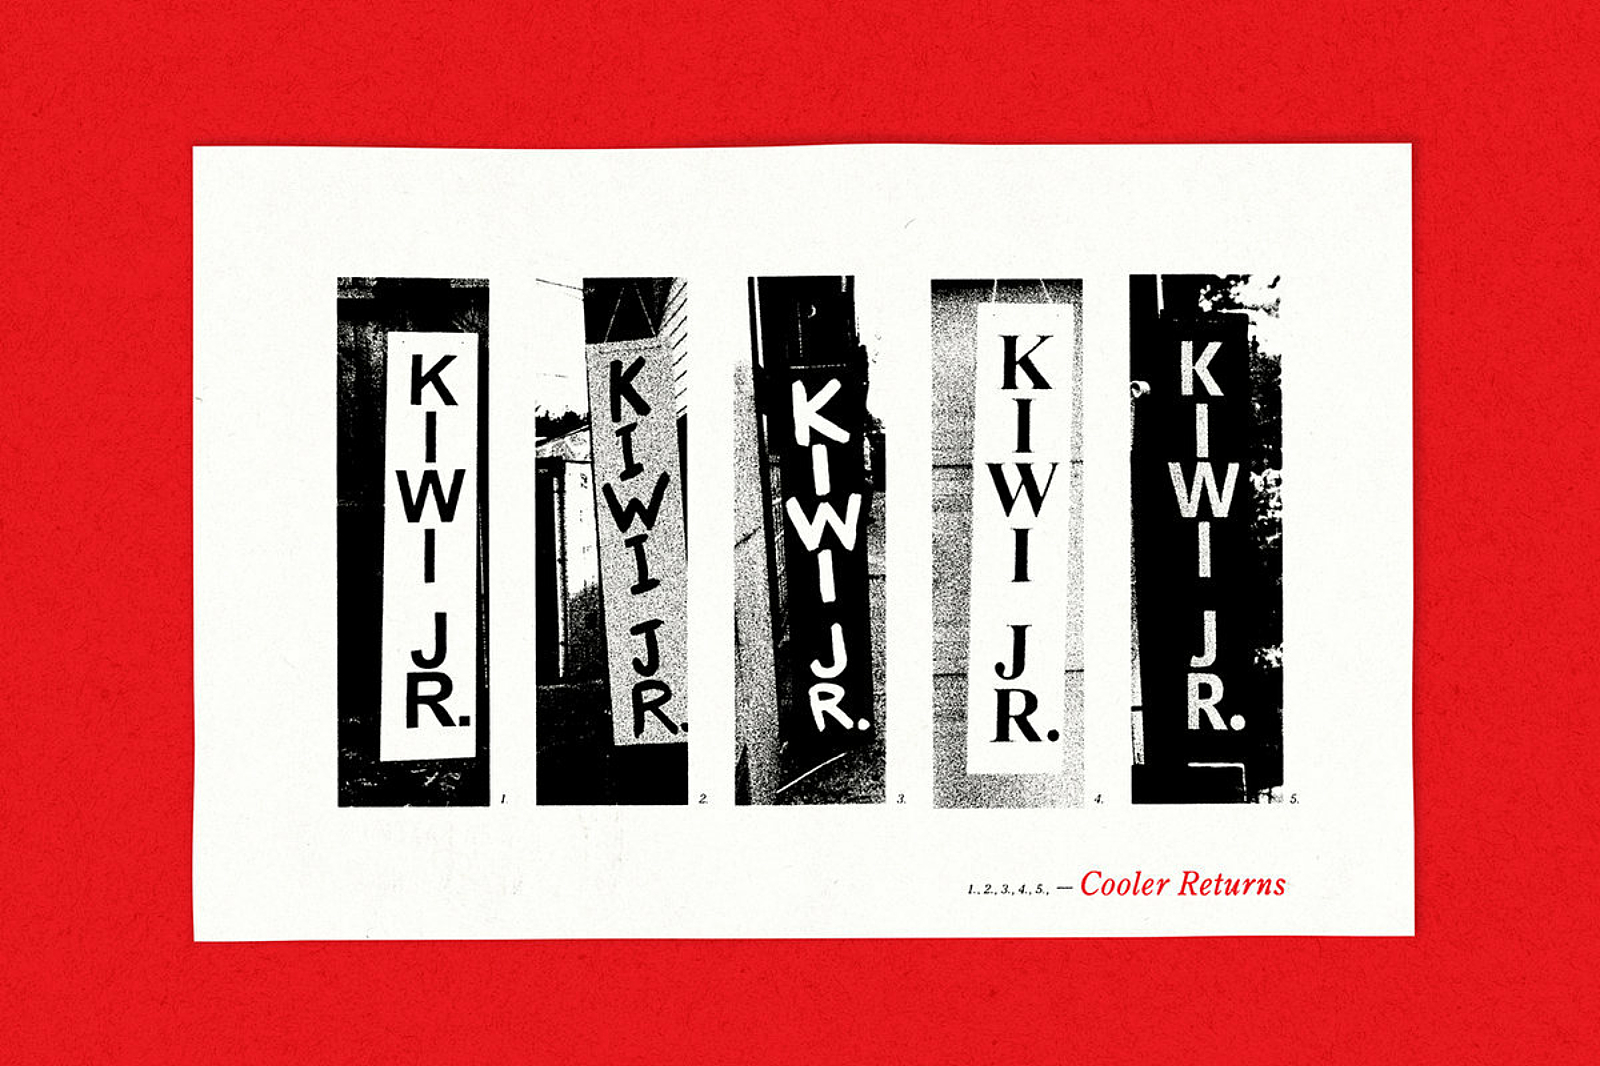 Kiwi Jr - Cooler Returns